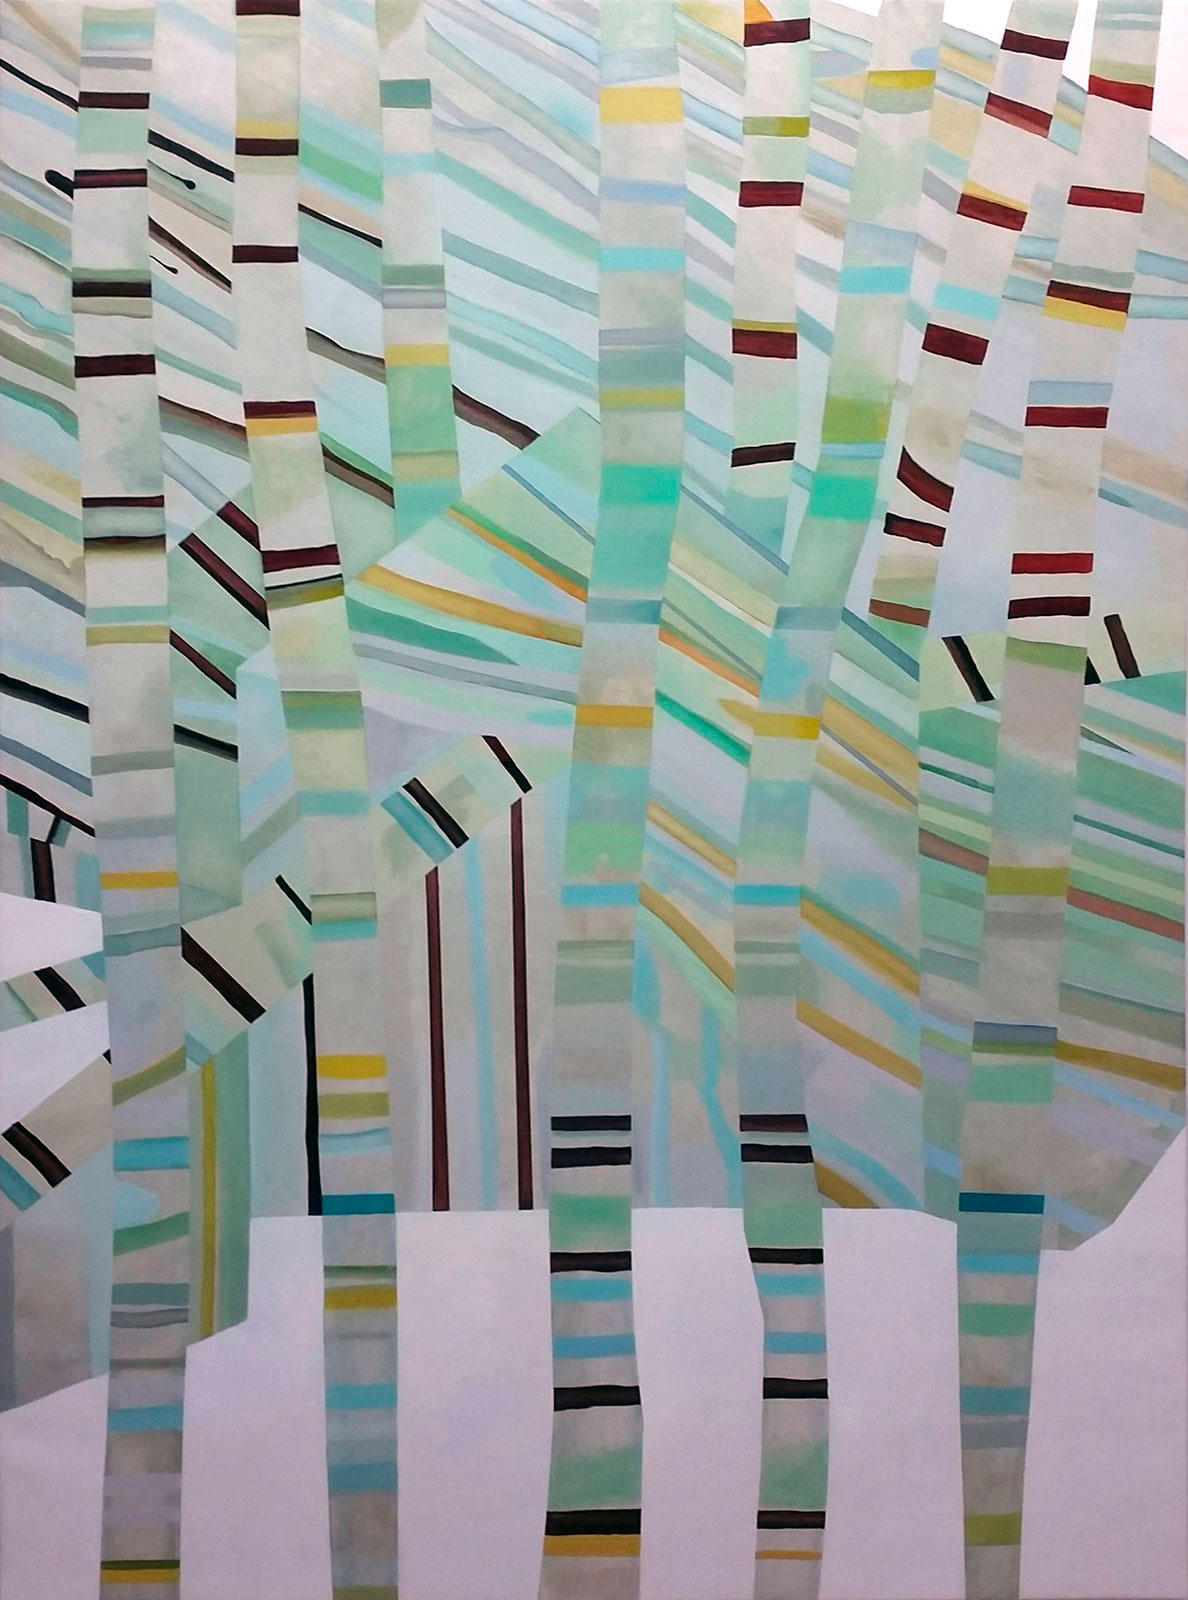 Hillevi Berglund, "Vintervägen" (Winter Road), 2014. Oil on canvas, 190 x 134 cm